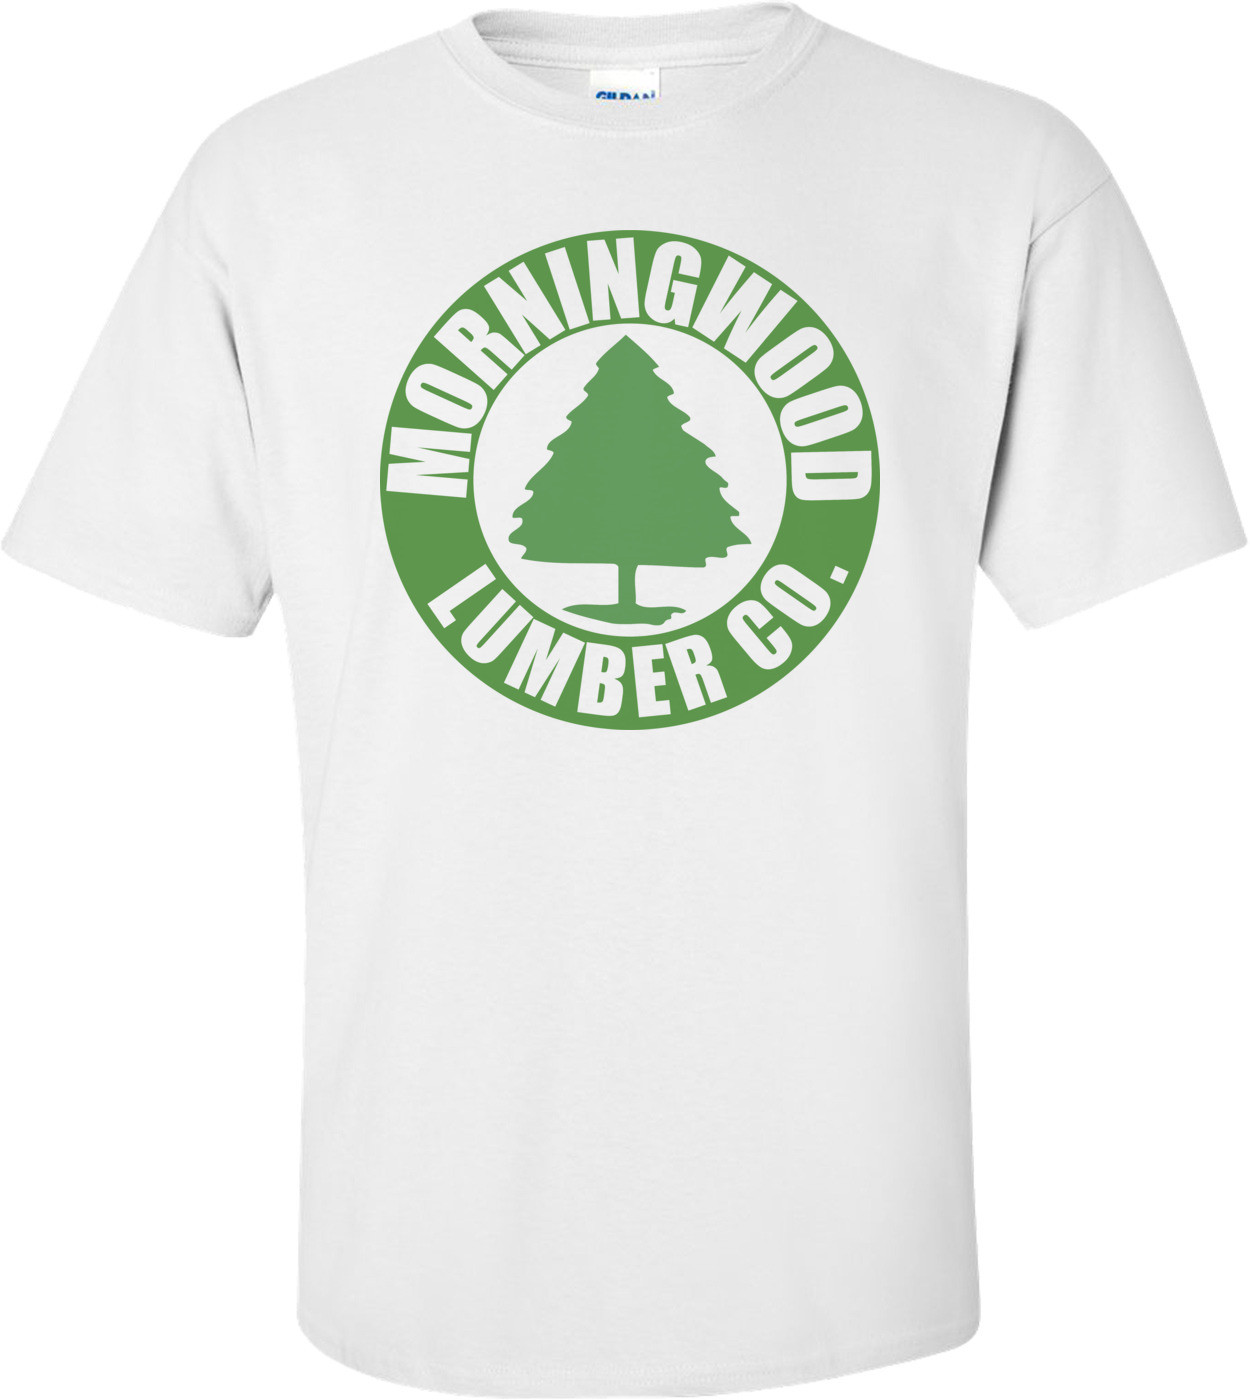 Morningwood Lumber Company T-shirt